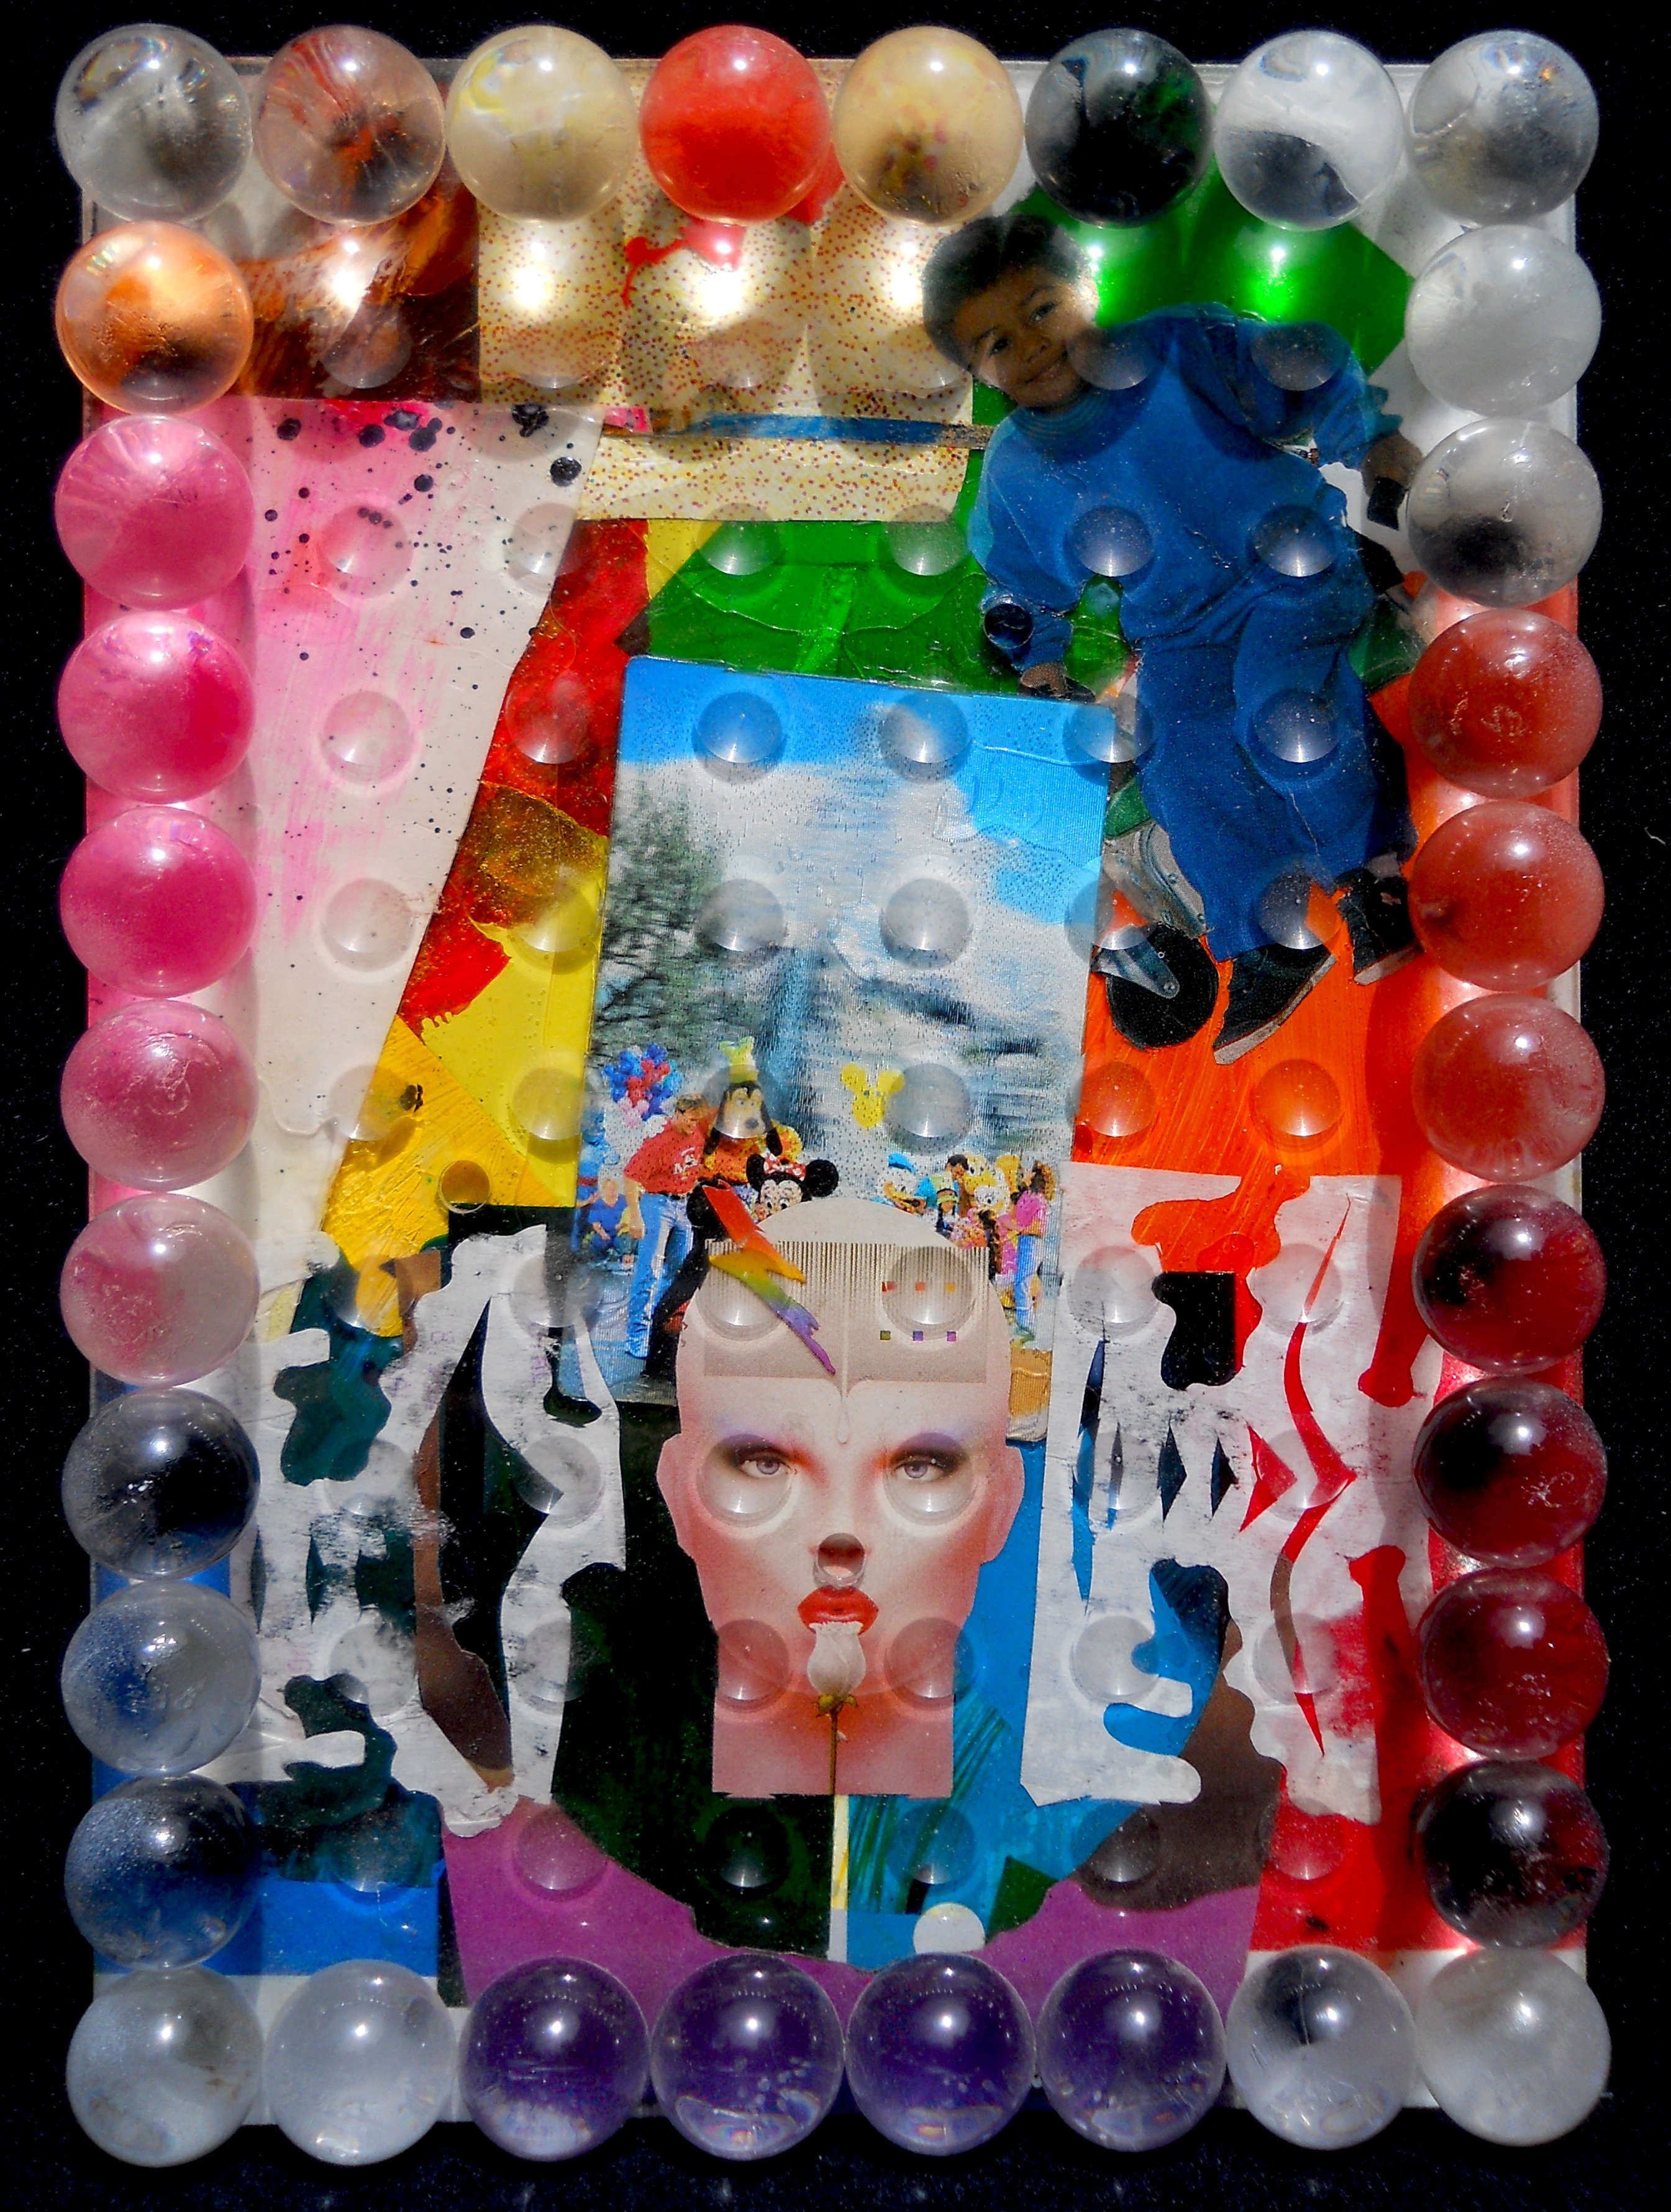 Collage, Acrylic on Plexiglas; 8.5x6 inches; June 2012